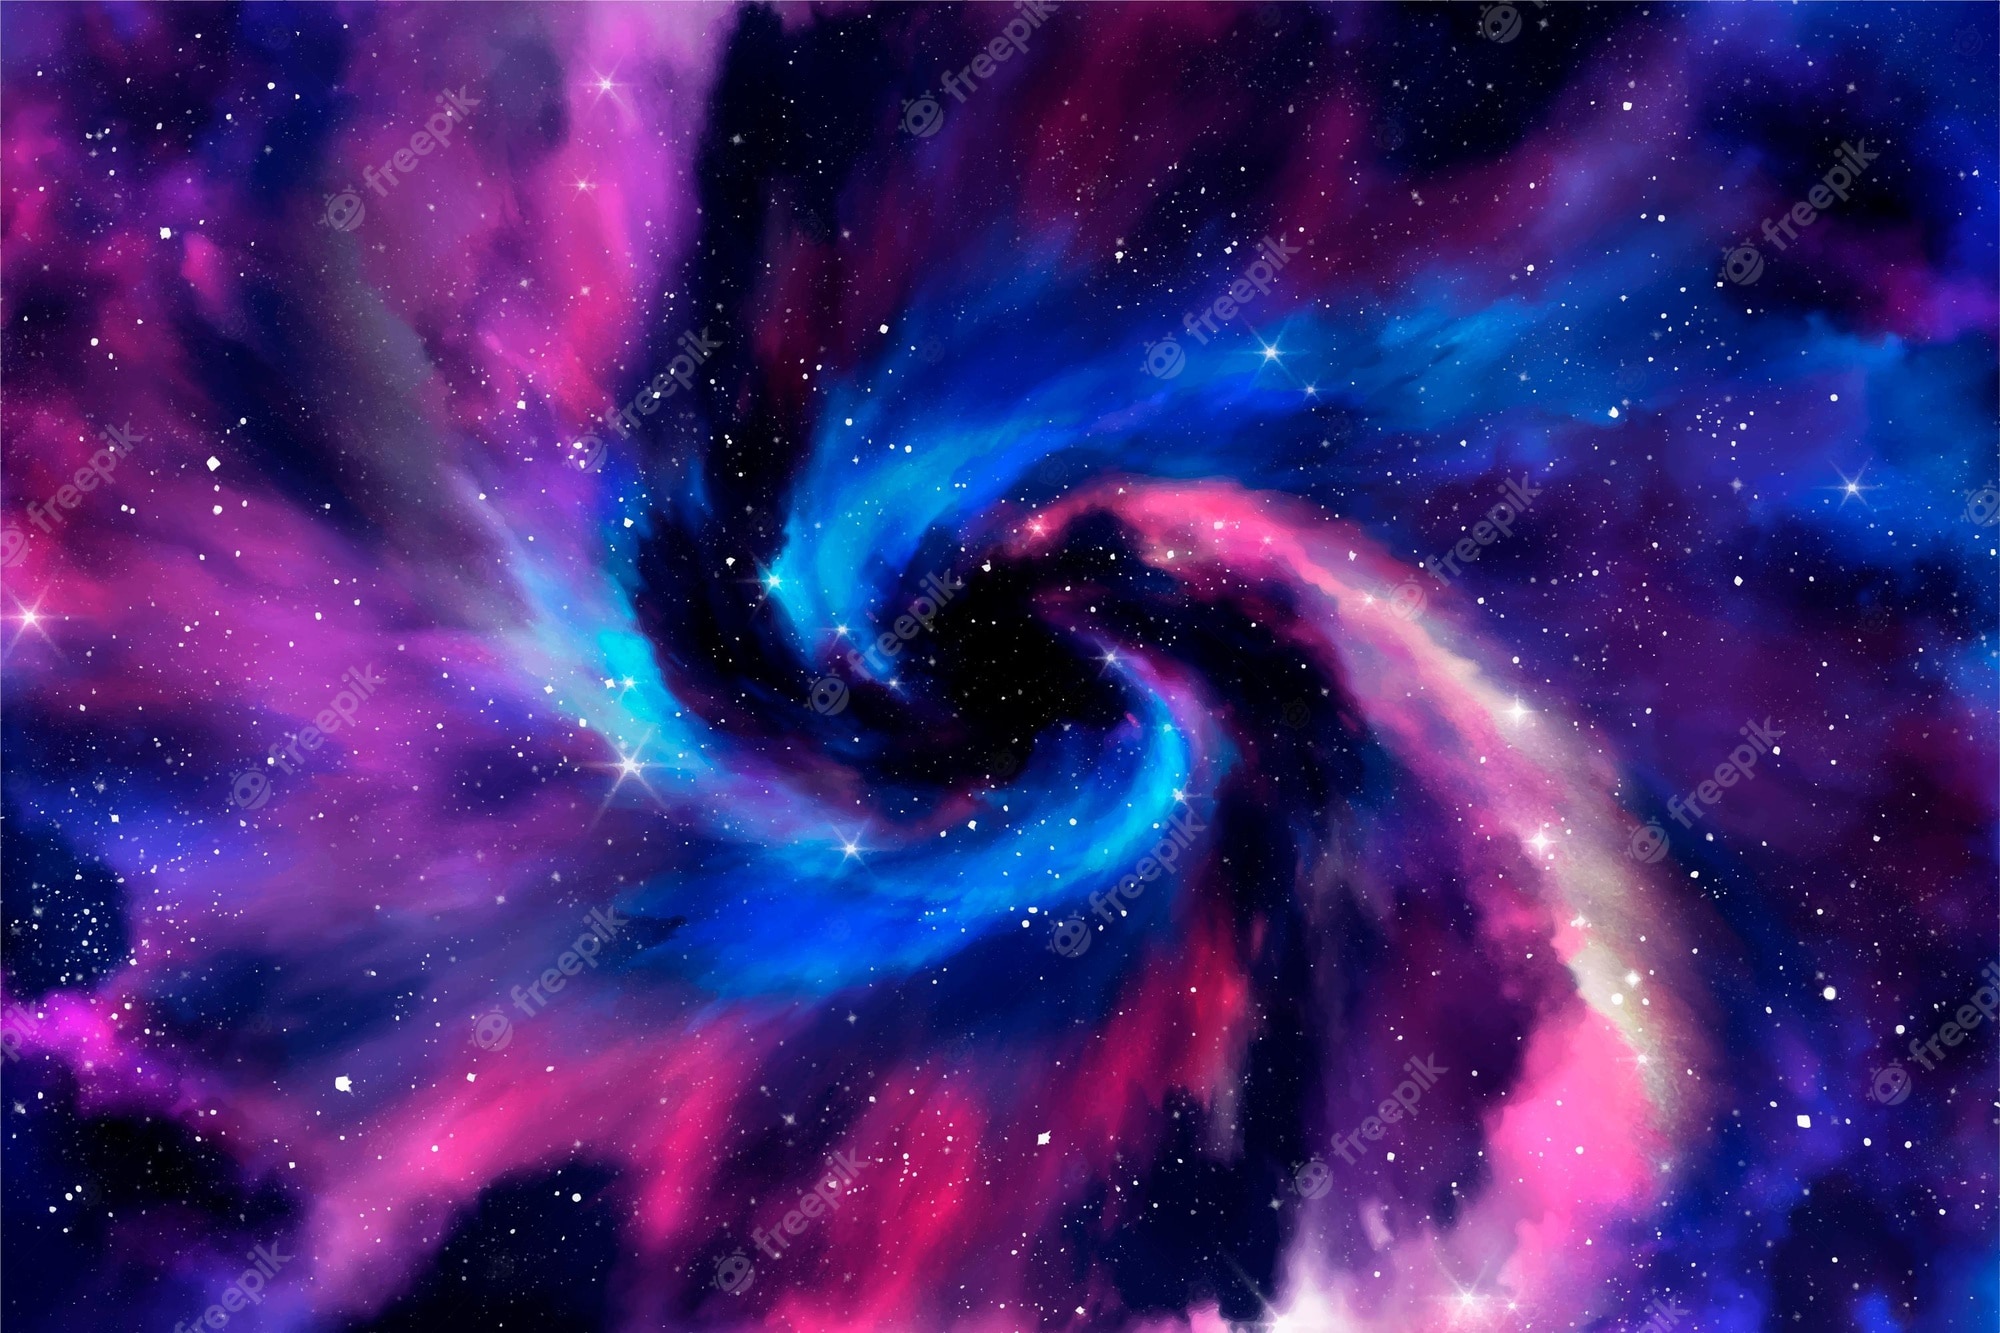 Galaxy Wallpaper Image